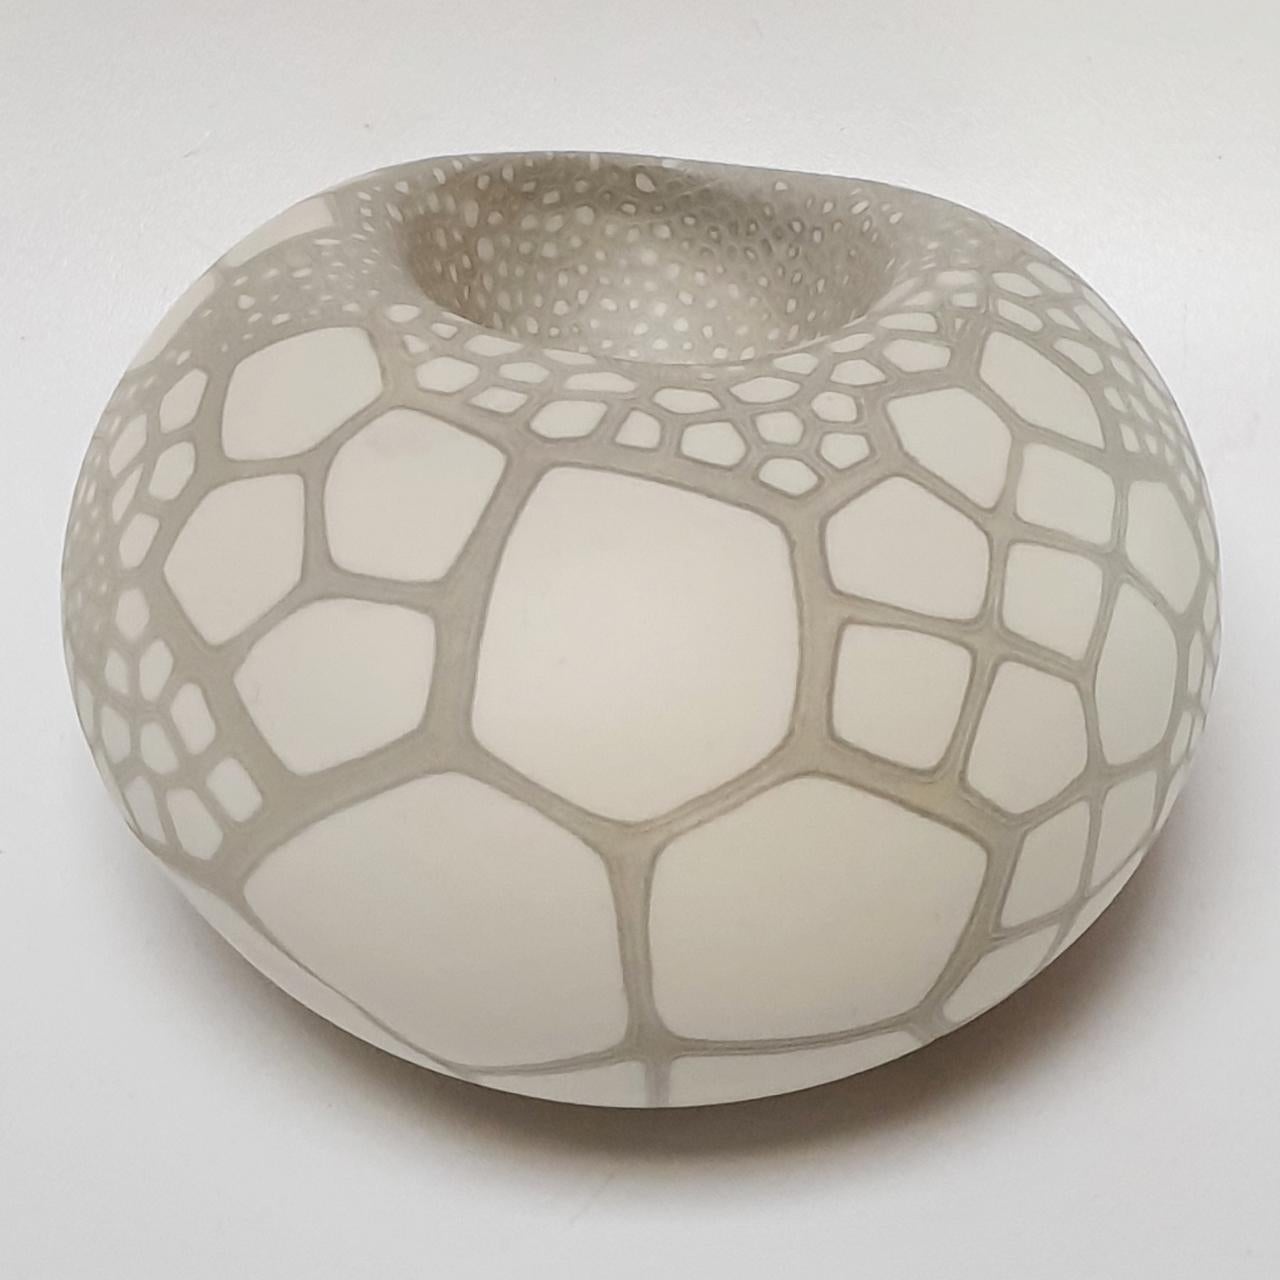 Objekt gemustert - contemporary modern abstract organic ceramic sculpture object - Gray Abstract Sculpture by Petra Benndorf